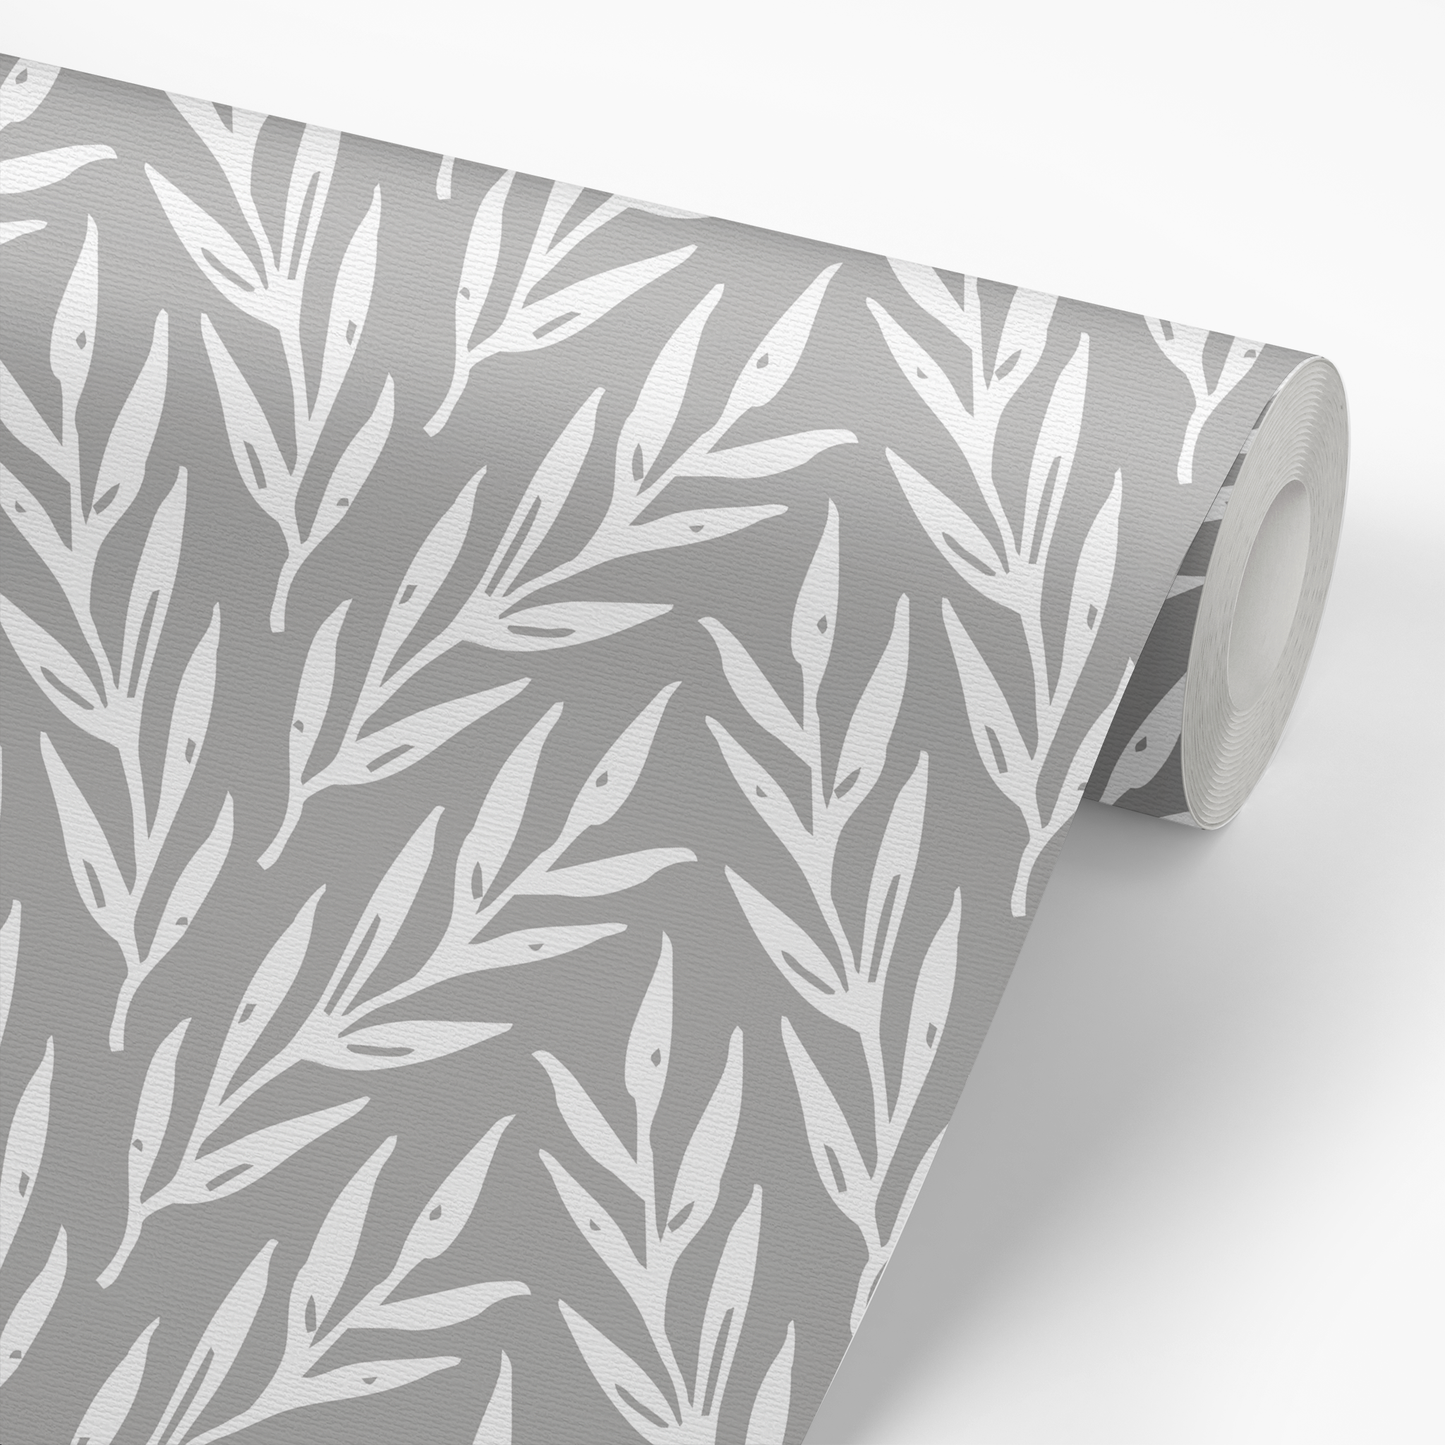 Ivy Wallpaper - Gray